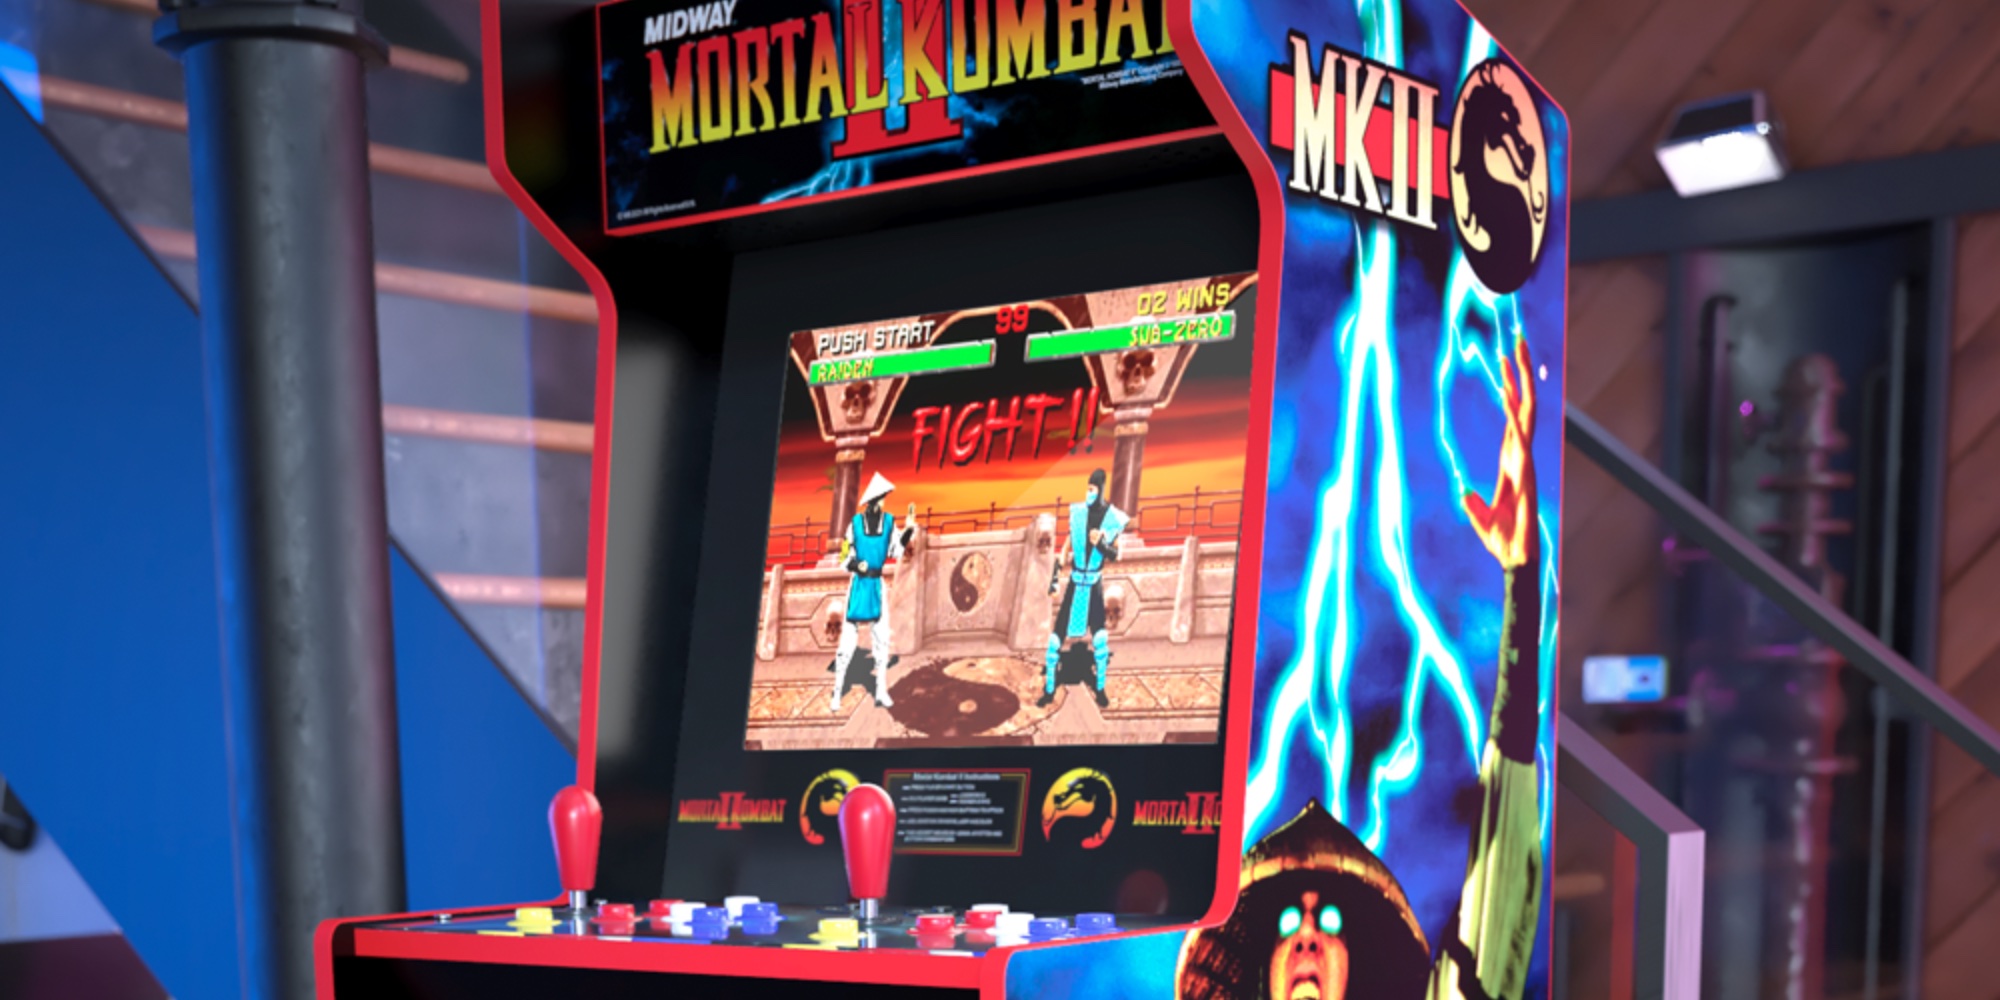 Arcade1up Mortal Kombat Countercade 3 Games in 1 